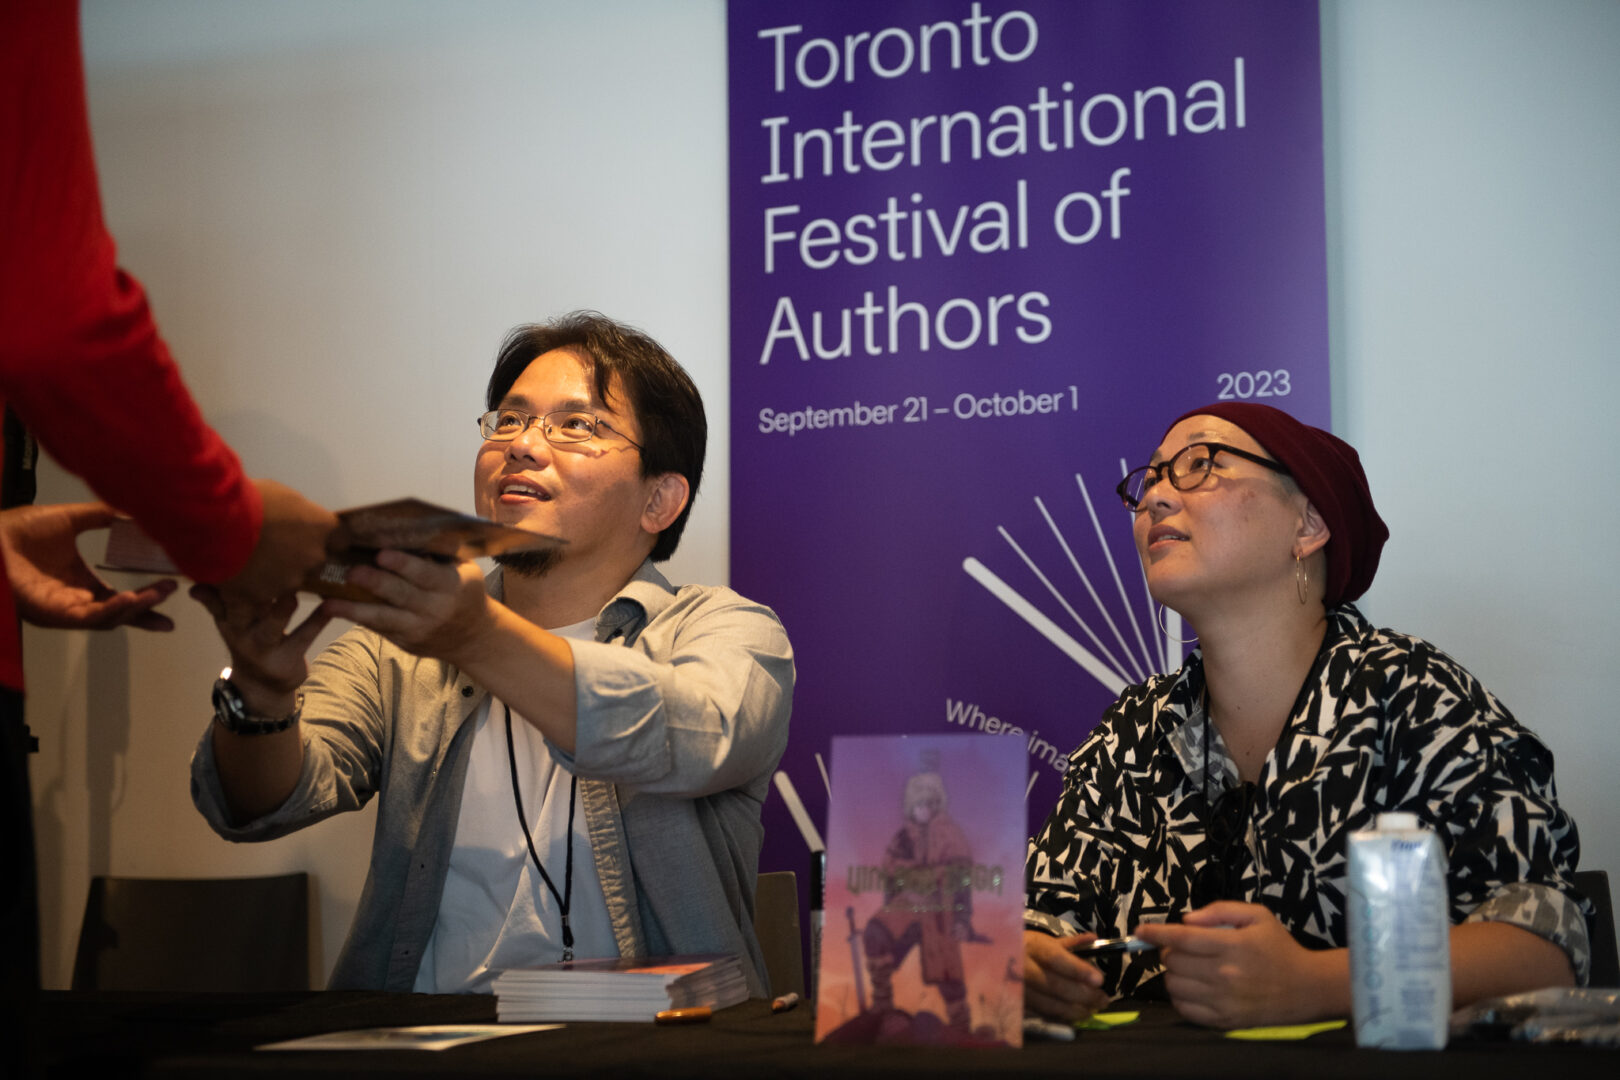 Gallery 5 - Toronto International Festival of Authors